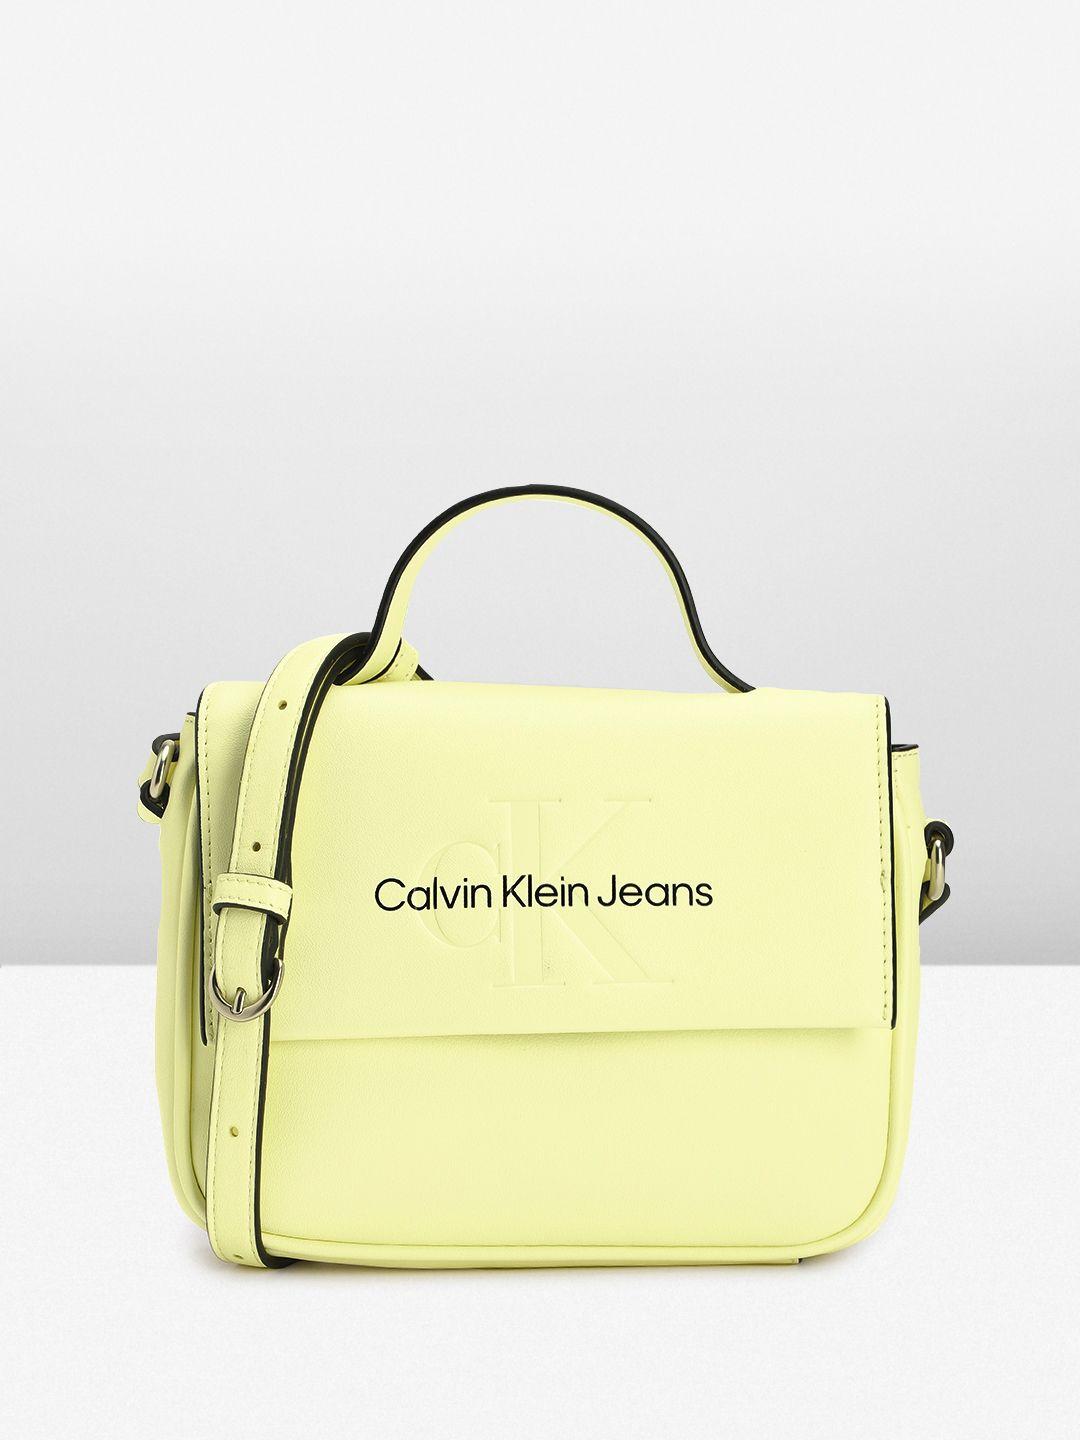 calvin klein women brand logo printed satchel